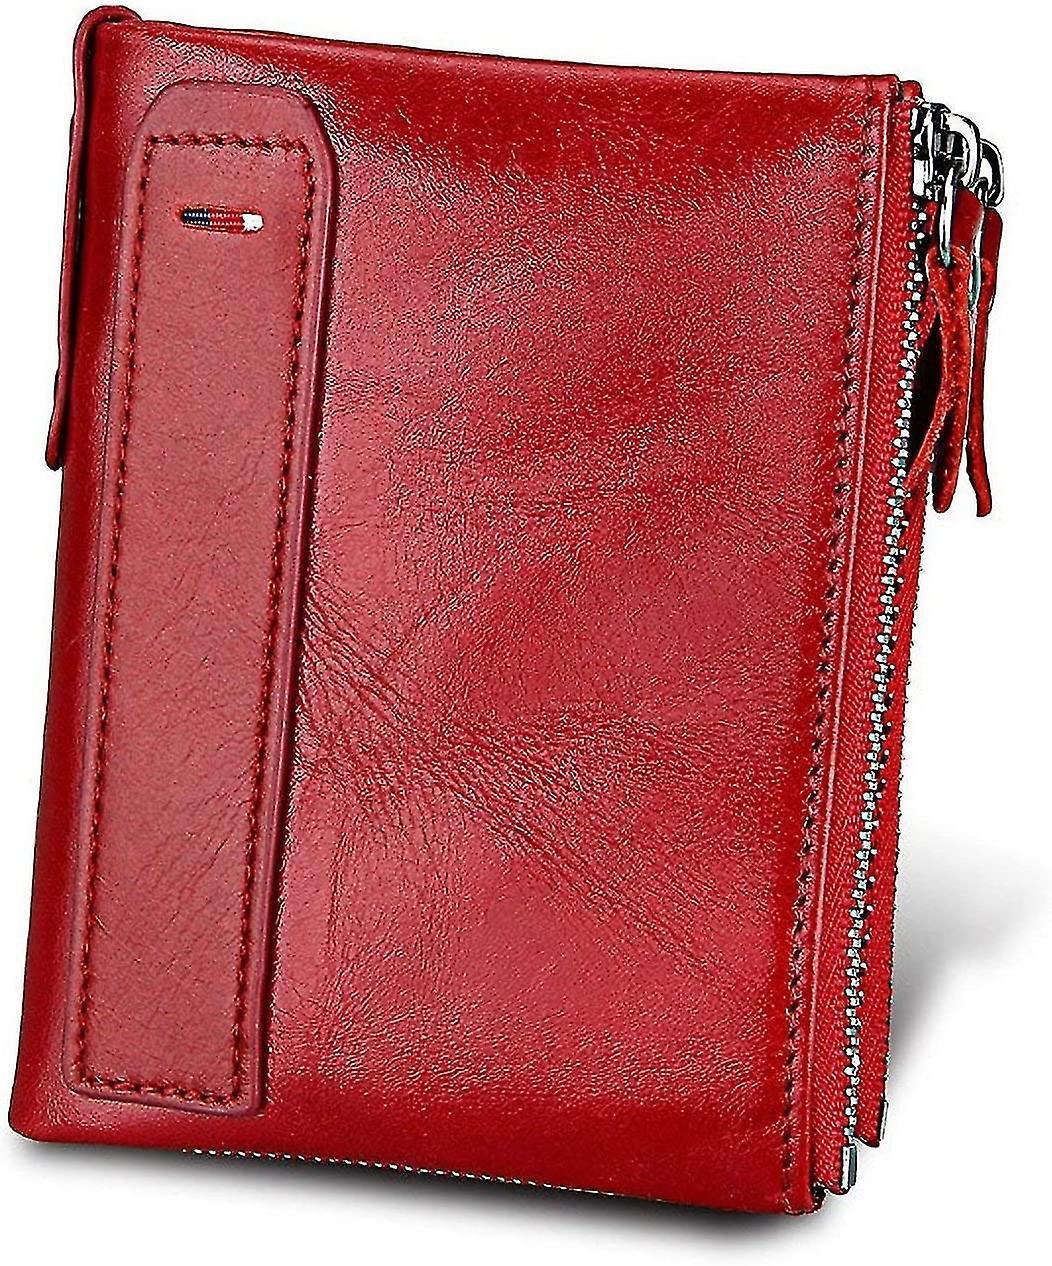 Women's Wallet Rfid Blocking Genuine Leather Credit Card Holder